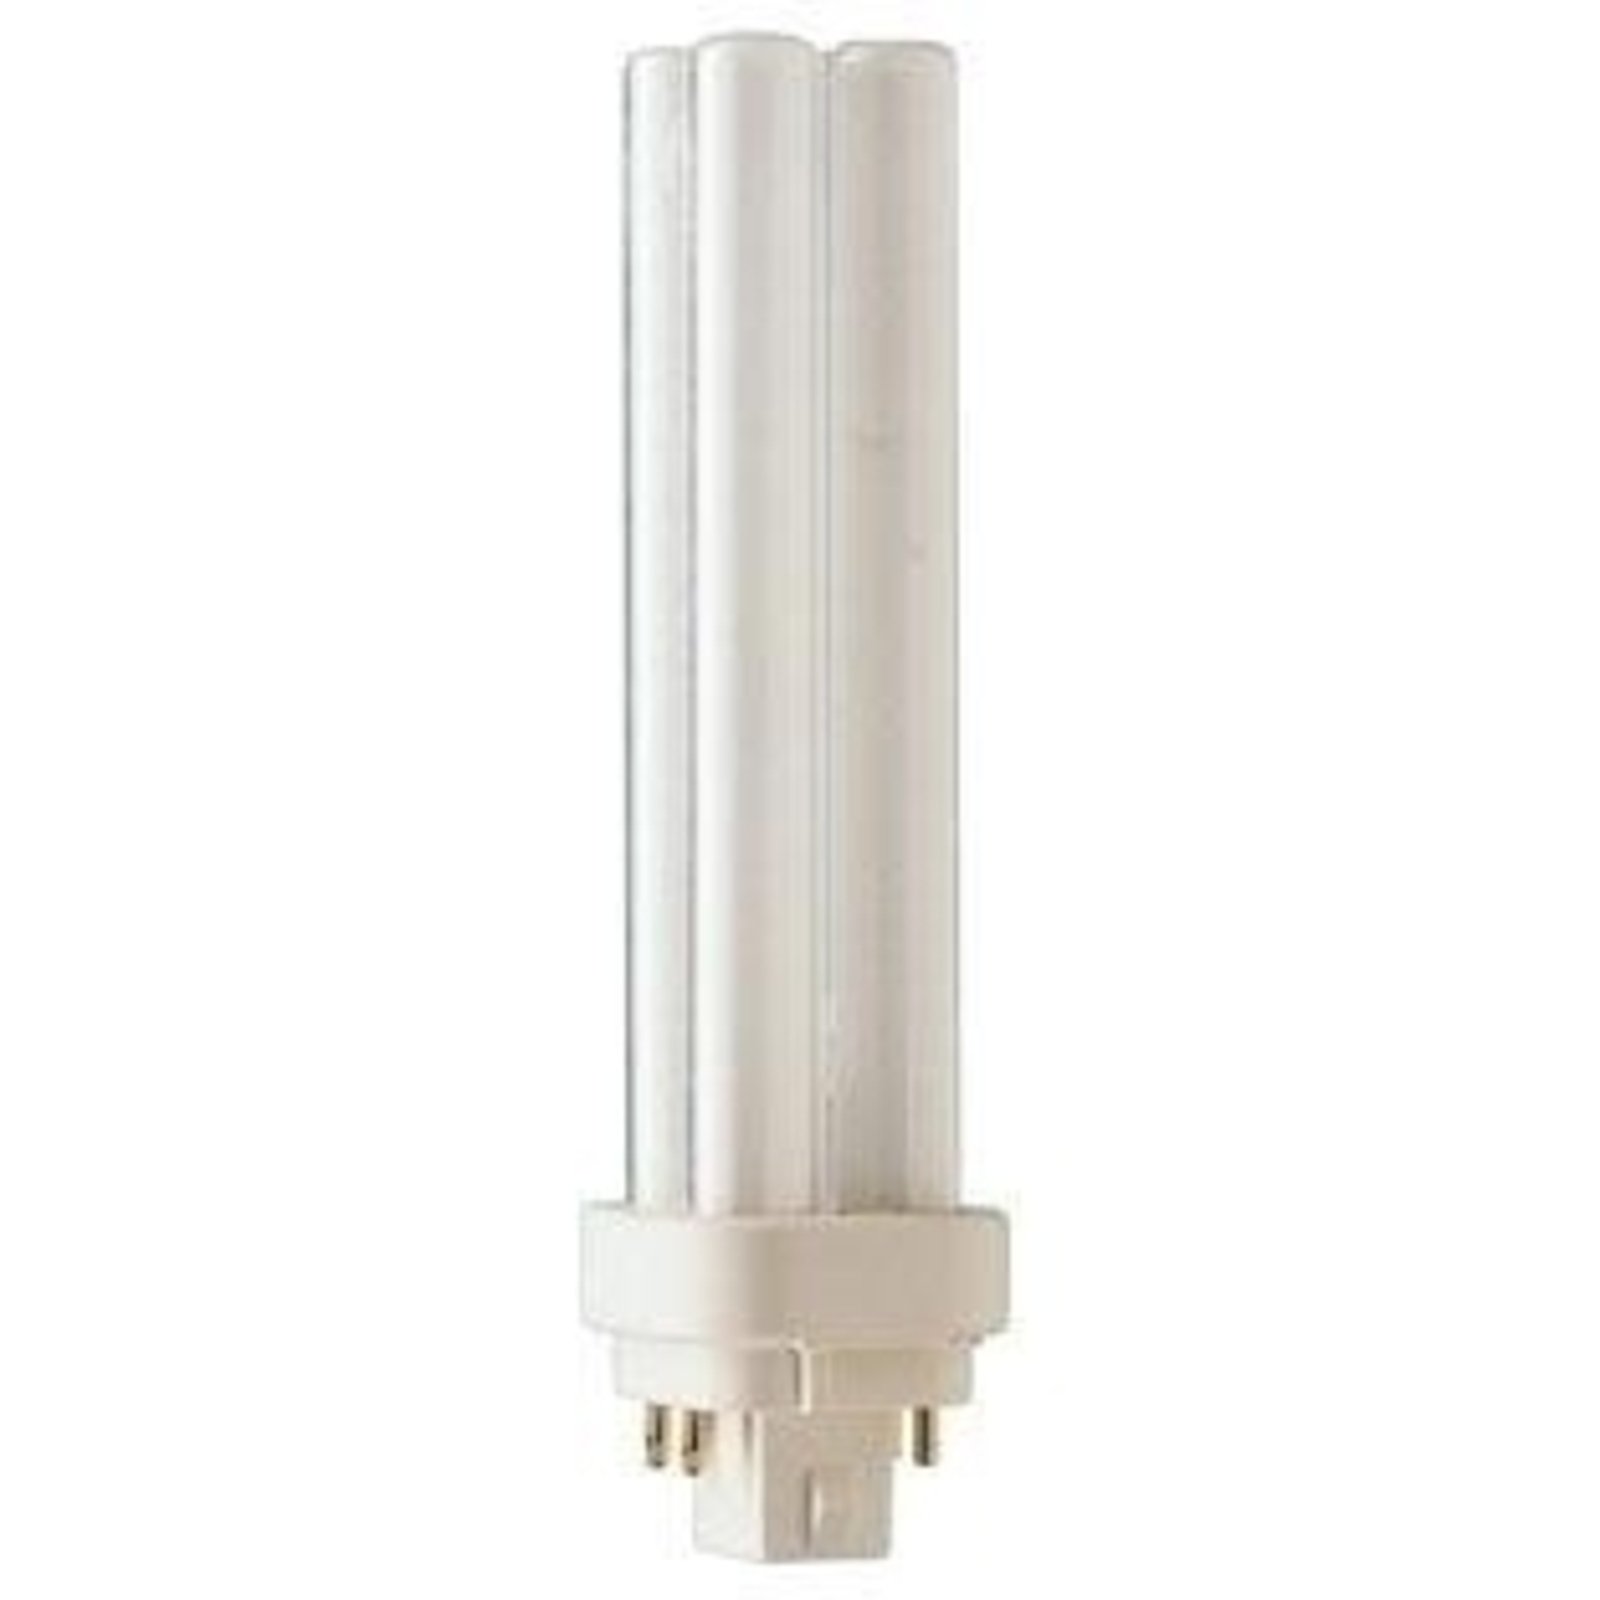 G24q compact fluorescent bulb Master 4pin 26 W 840